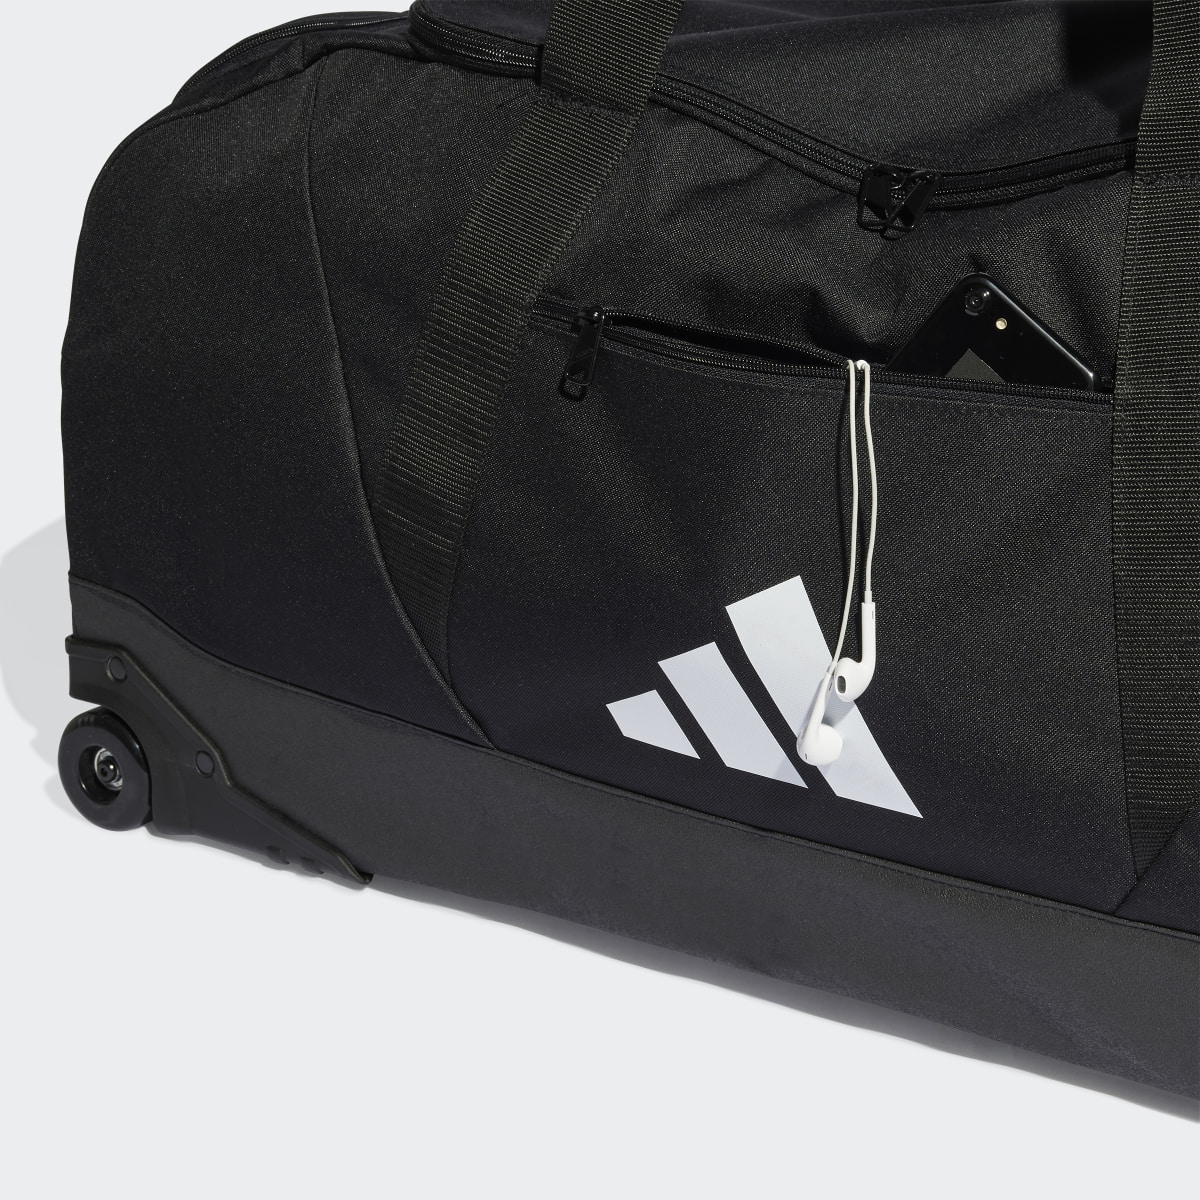 Adidas Tiro League Trolley Team Bag Extra Large. 6